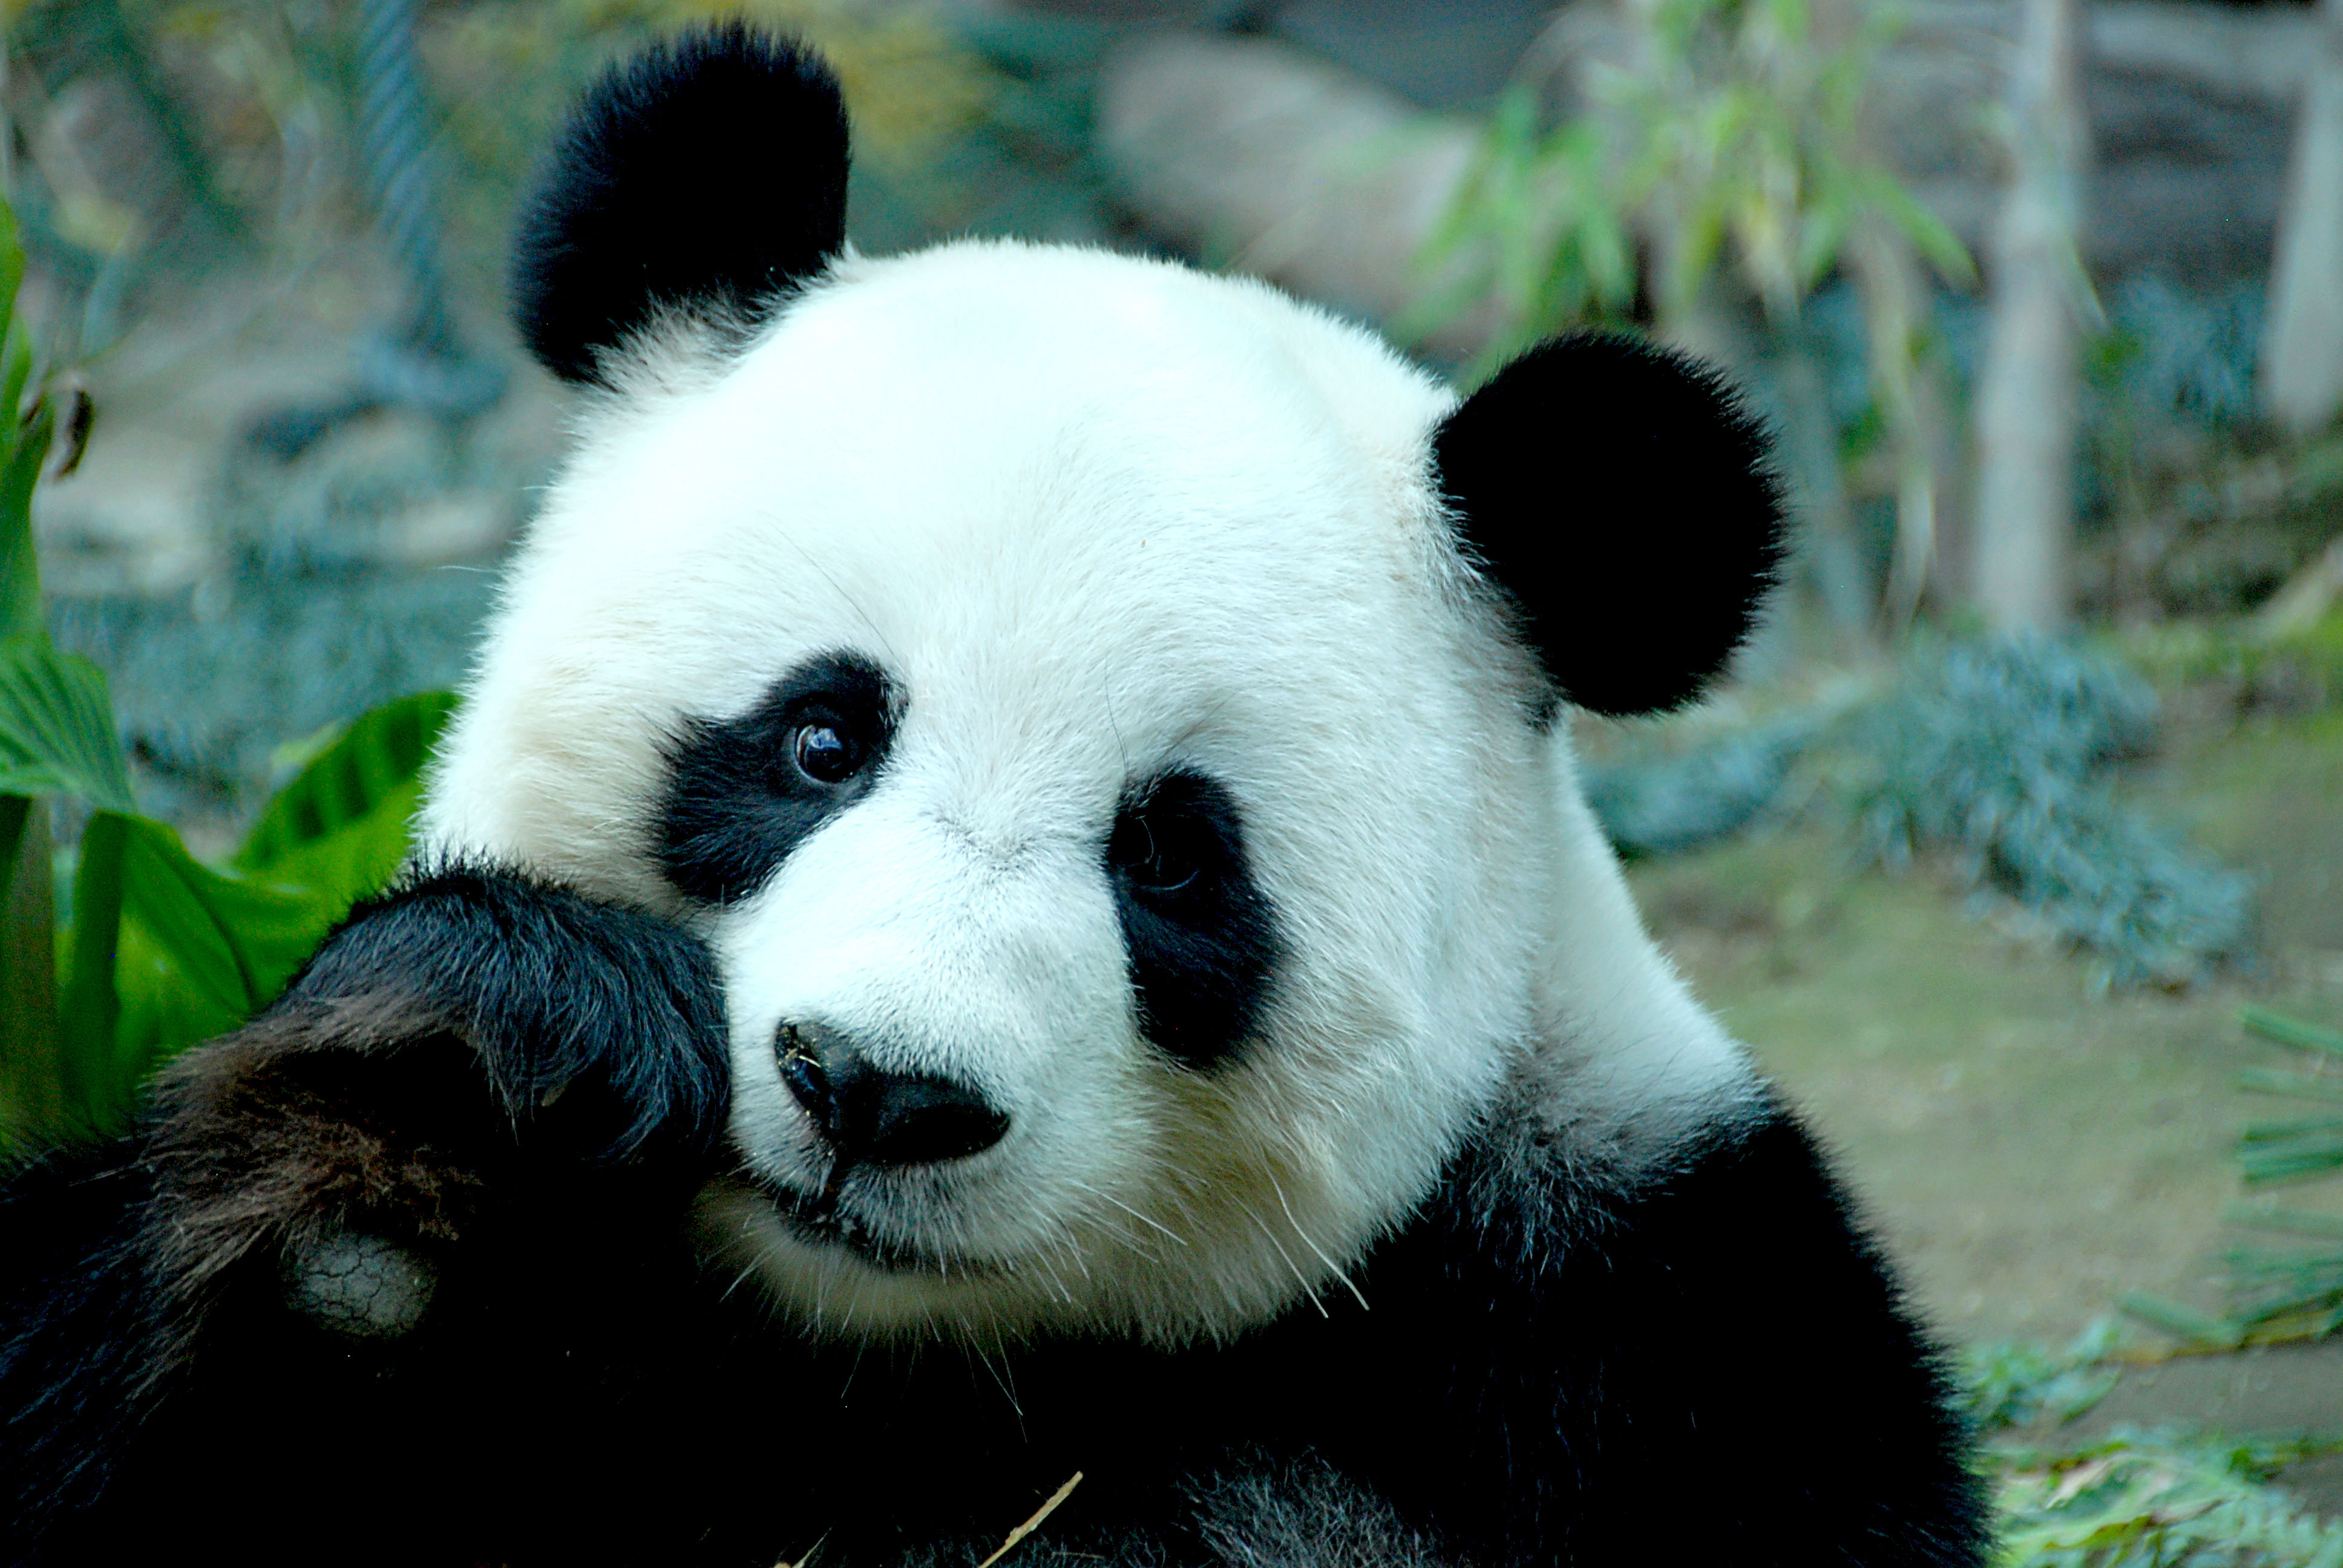 Panda 4k Ultra HD Wallpaper and Background Image | 3872x2592 | ID:369059